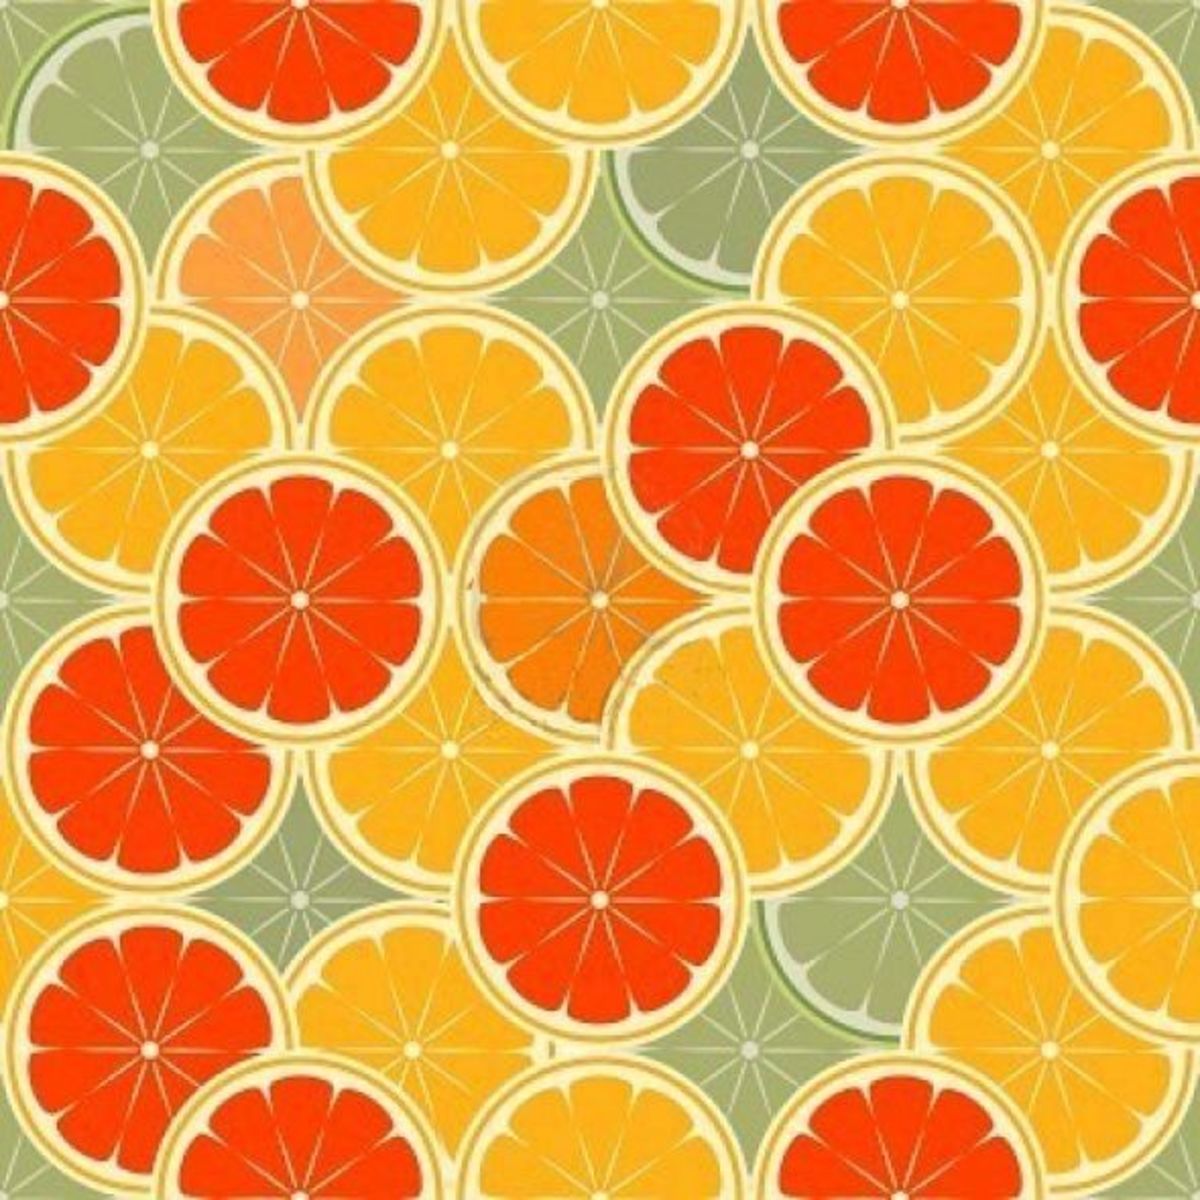 Oranges as a pattern, public domain image (from a kinda strange source: Hawaiian dermatologists?)